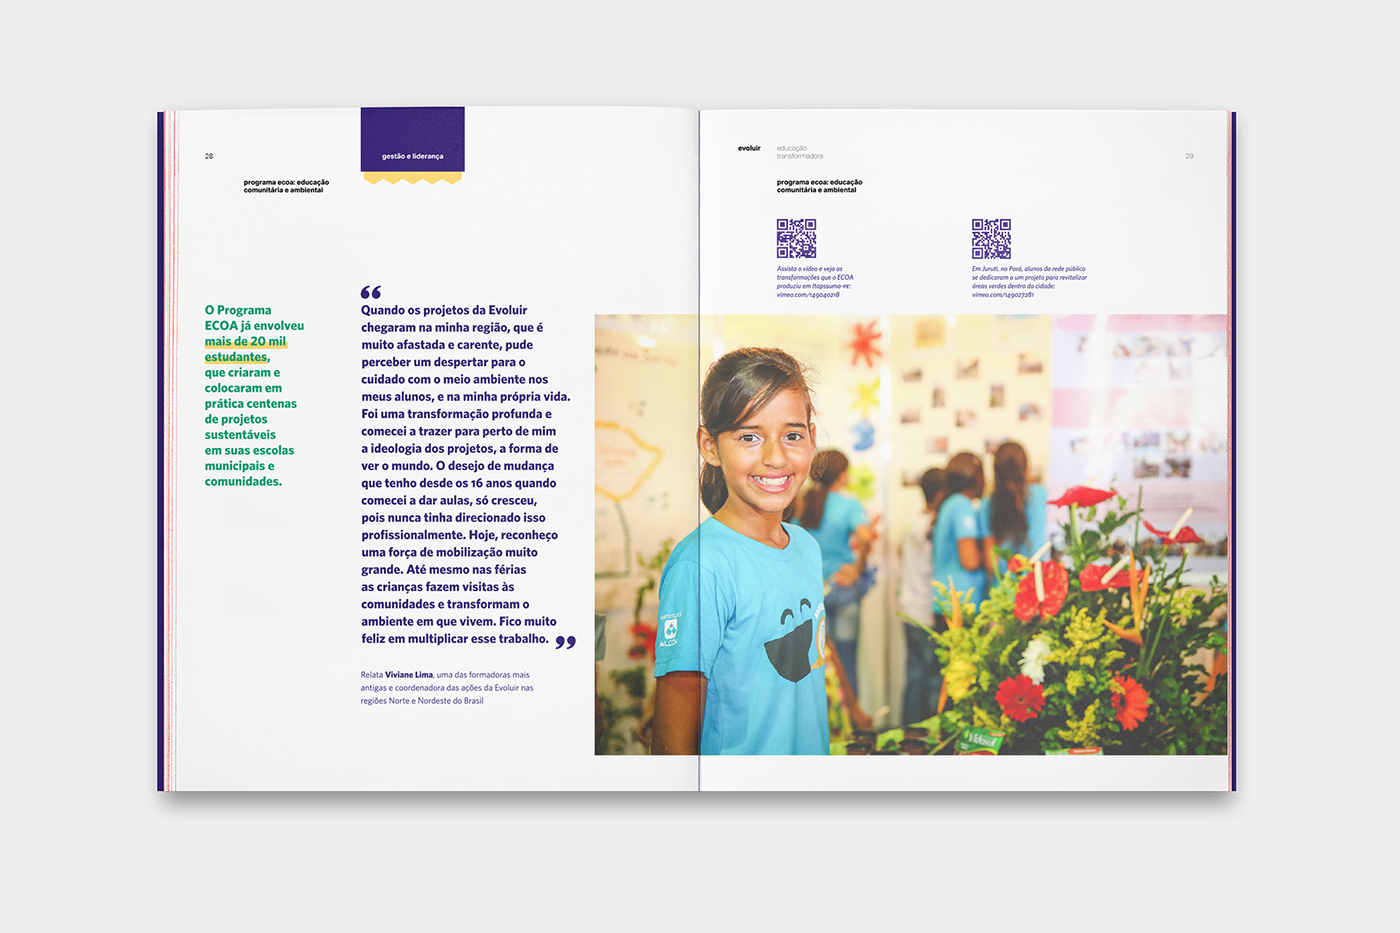 evoluir pianofuzz Iniciativa Social Education culture school redesign brand publisher Editora